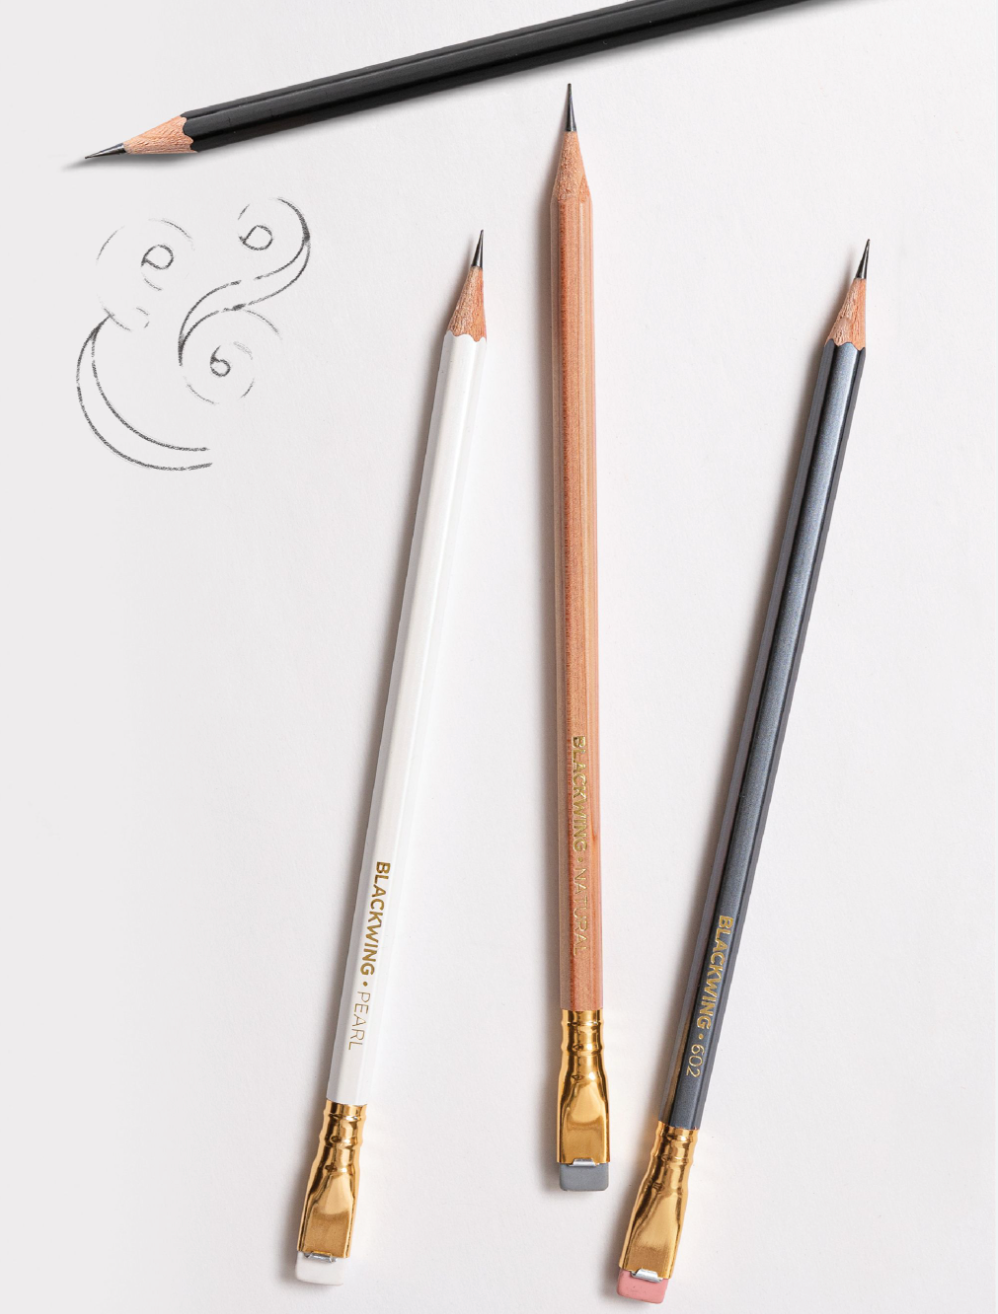 Blackwing - Matte – Pencil per unit